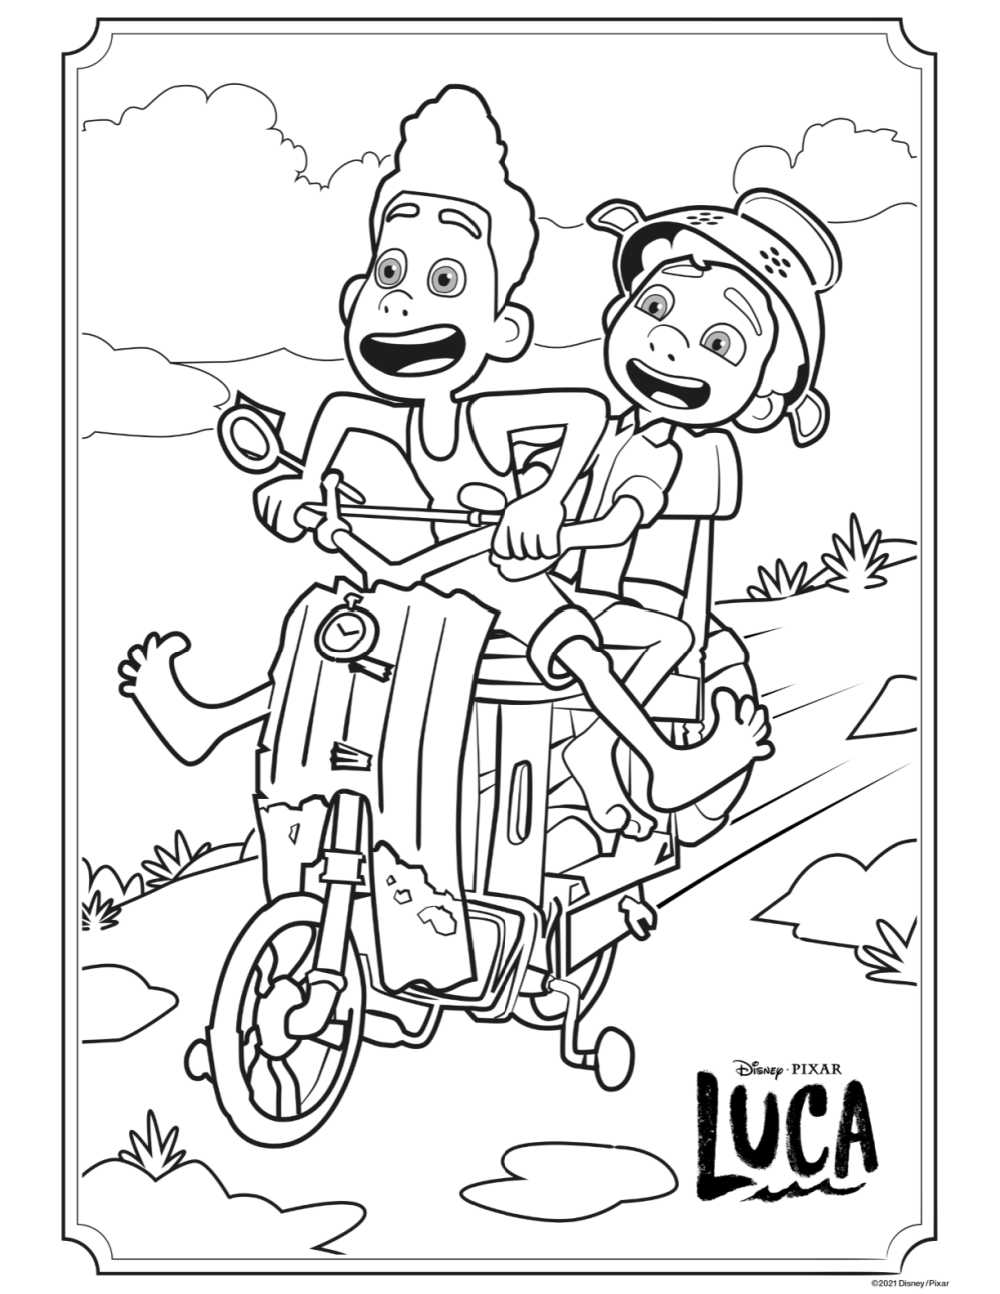 Classic Disney Luca Coloring Book Activity Bundle for Kids Luca